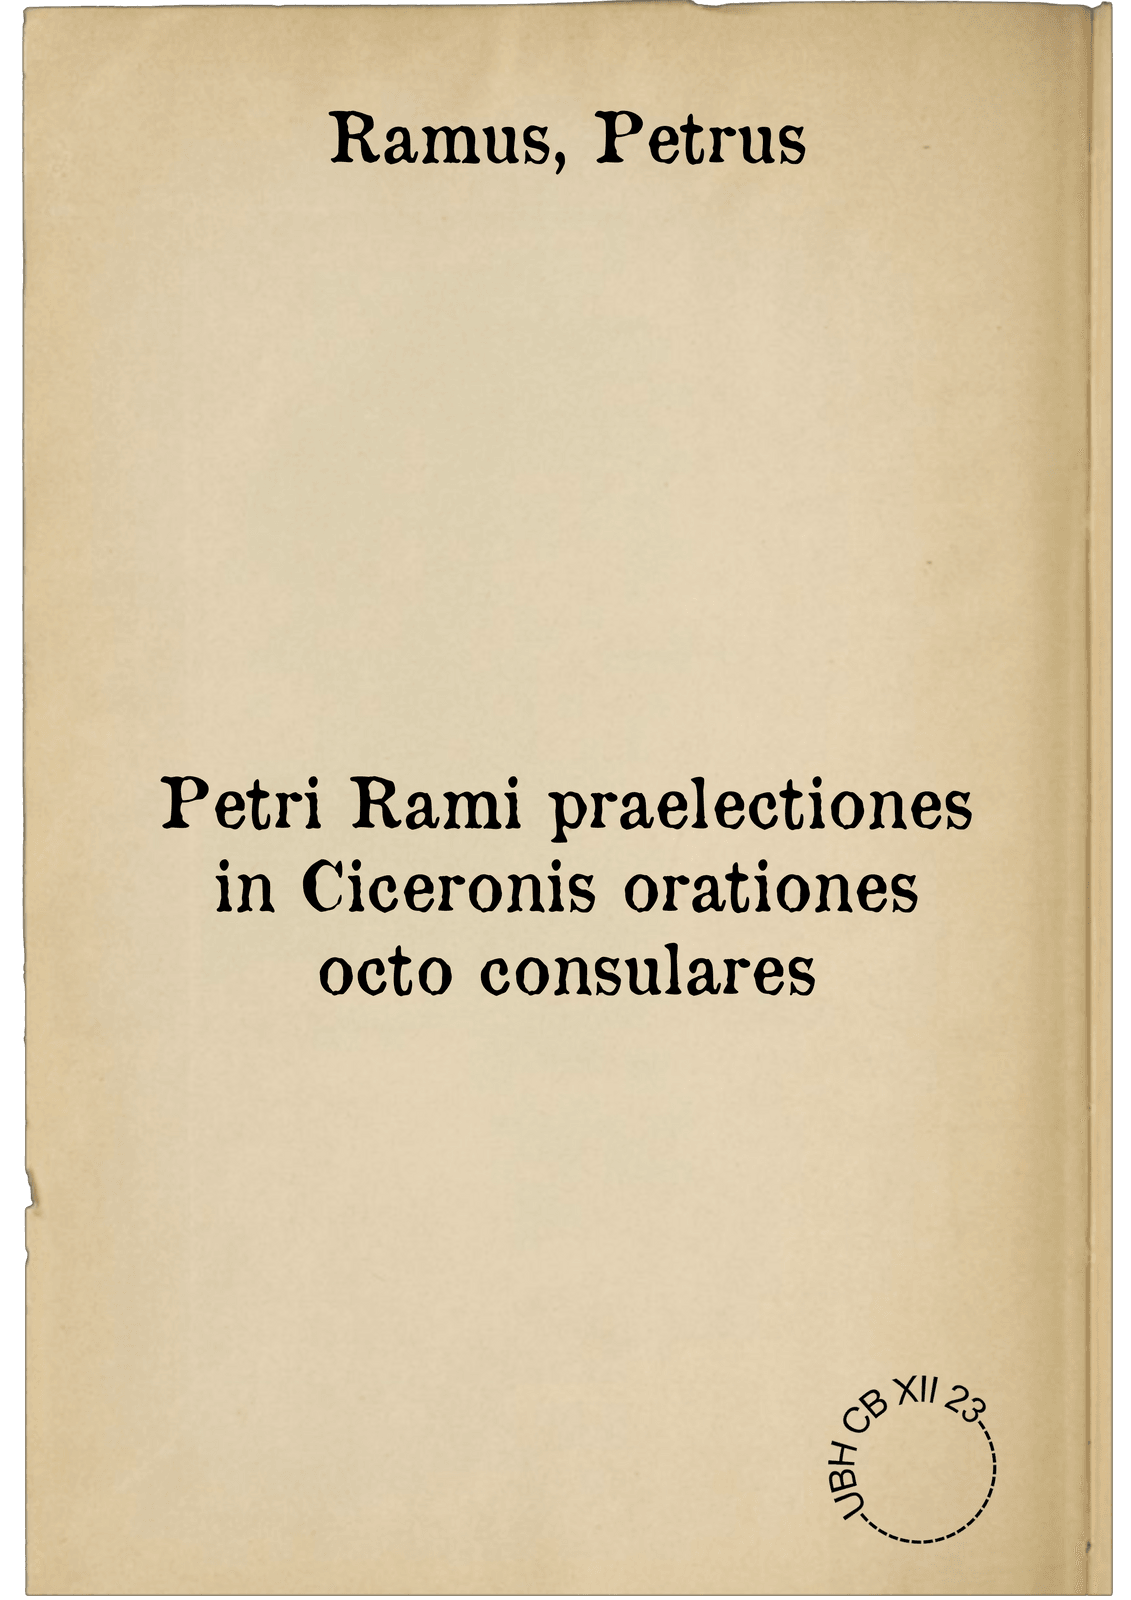 Petri Rami praelectiones in Ciceronis orationes octo consulares